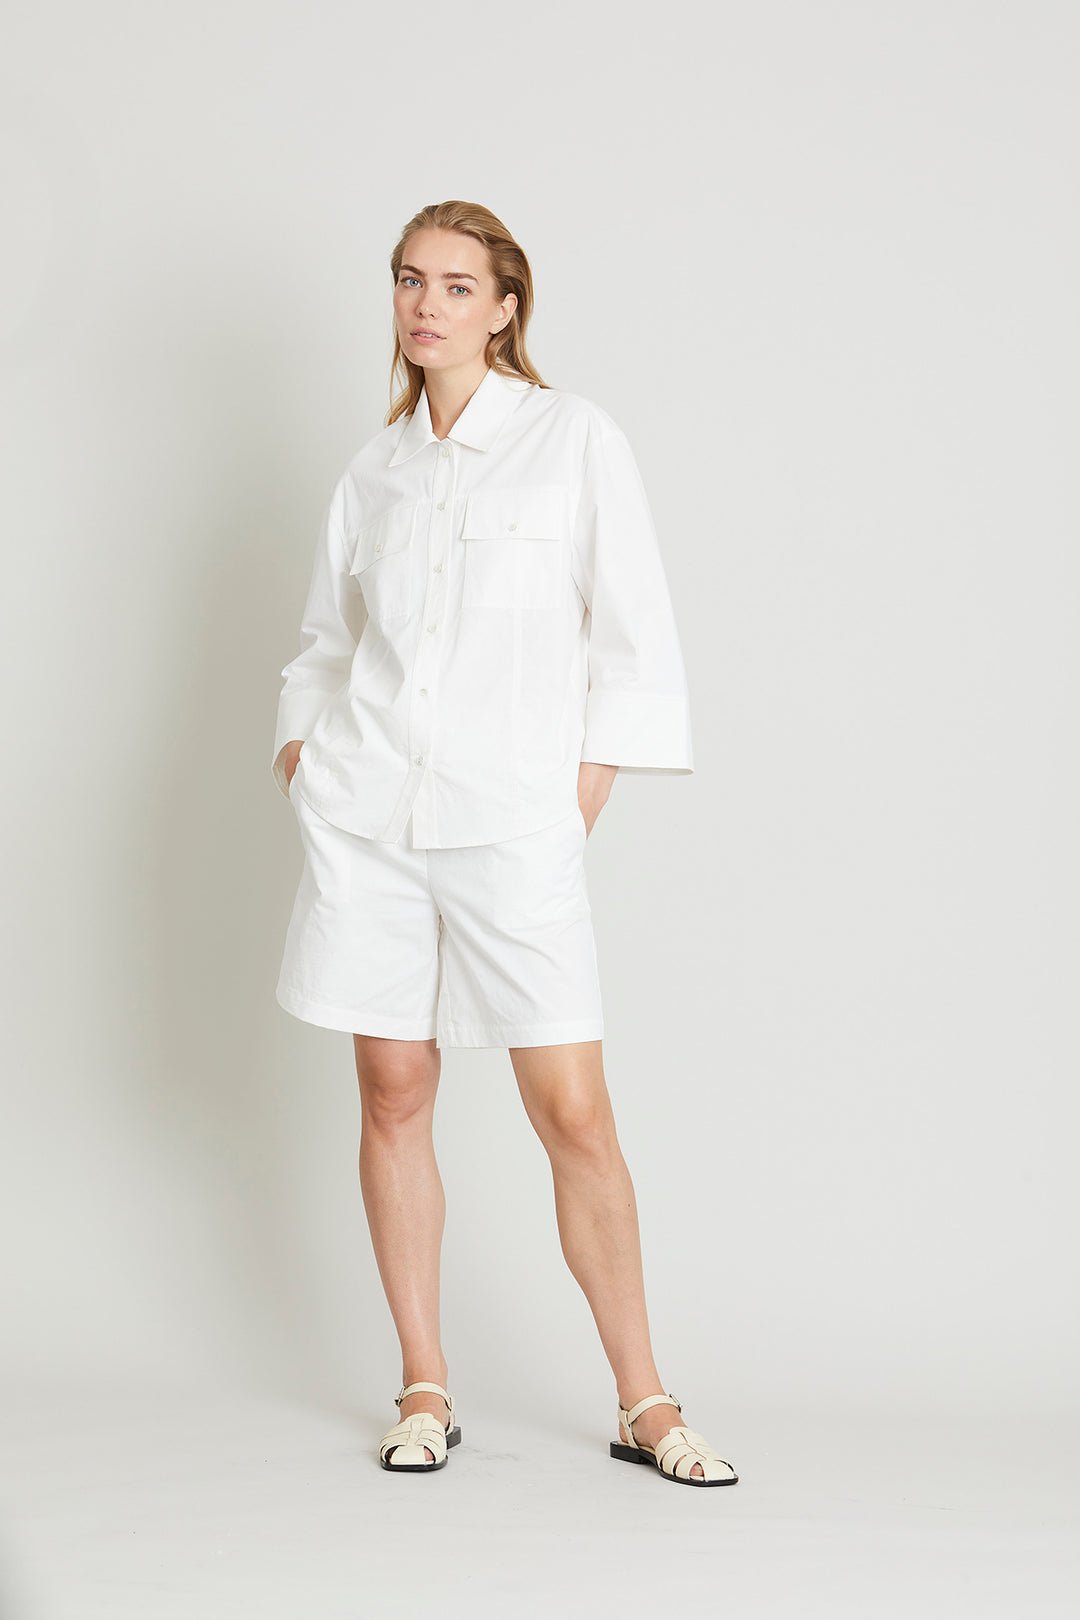 Heartmade Nuria shorts SHORTS 02 Off white